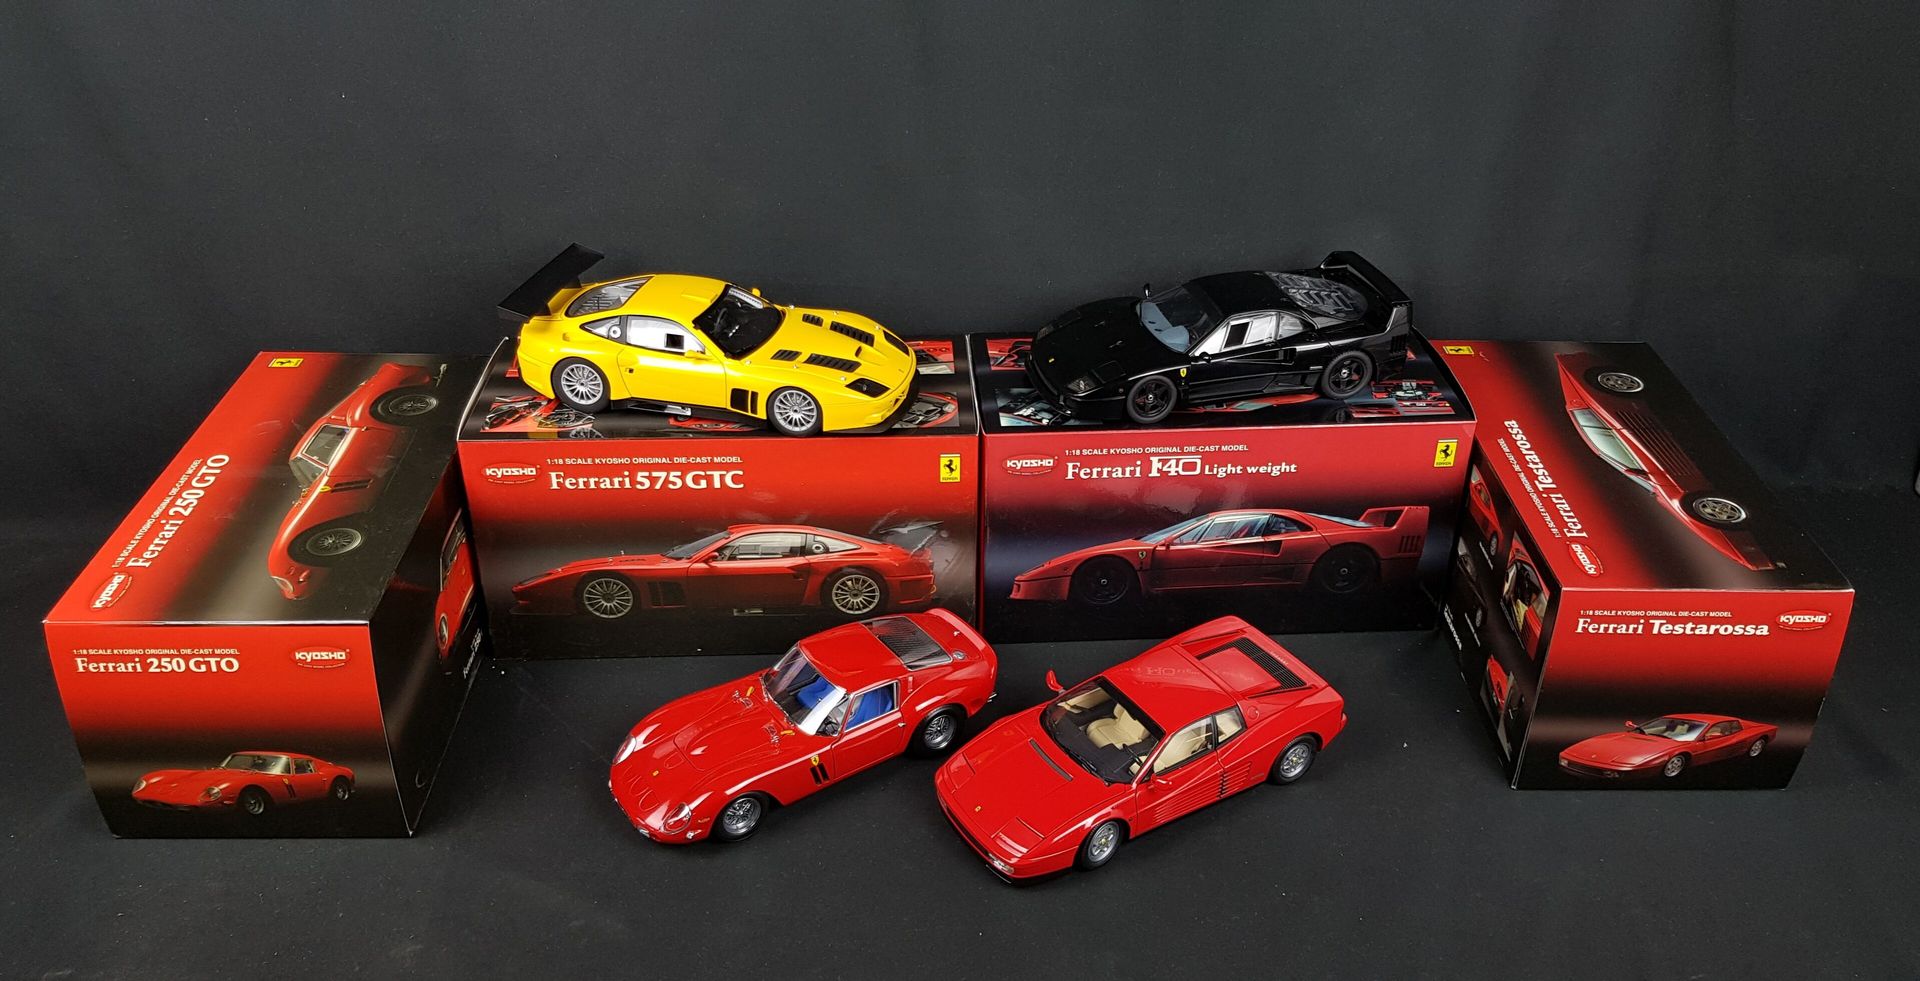 Null KYOSHO - FOUR Ferrari im Maßstab 1:18:

1x F40 Licht Weiß

1x 575 GTC

1x T&hellip;